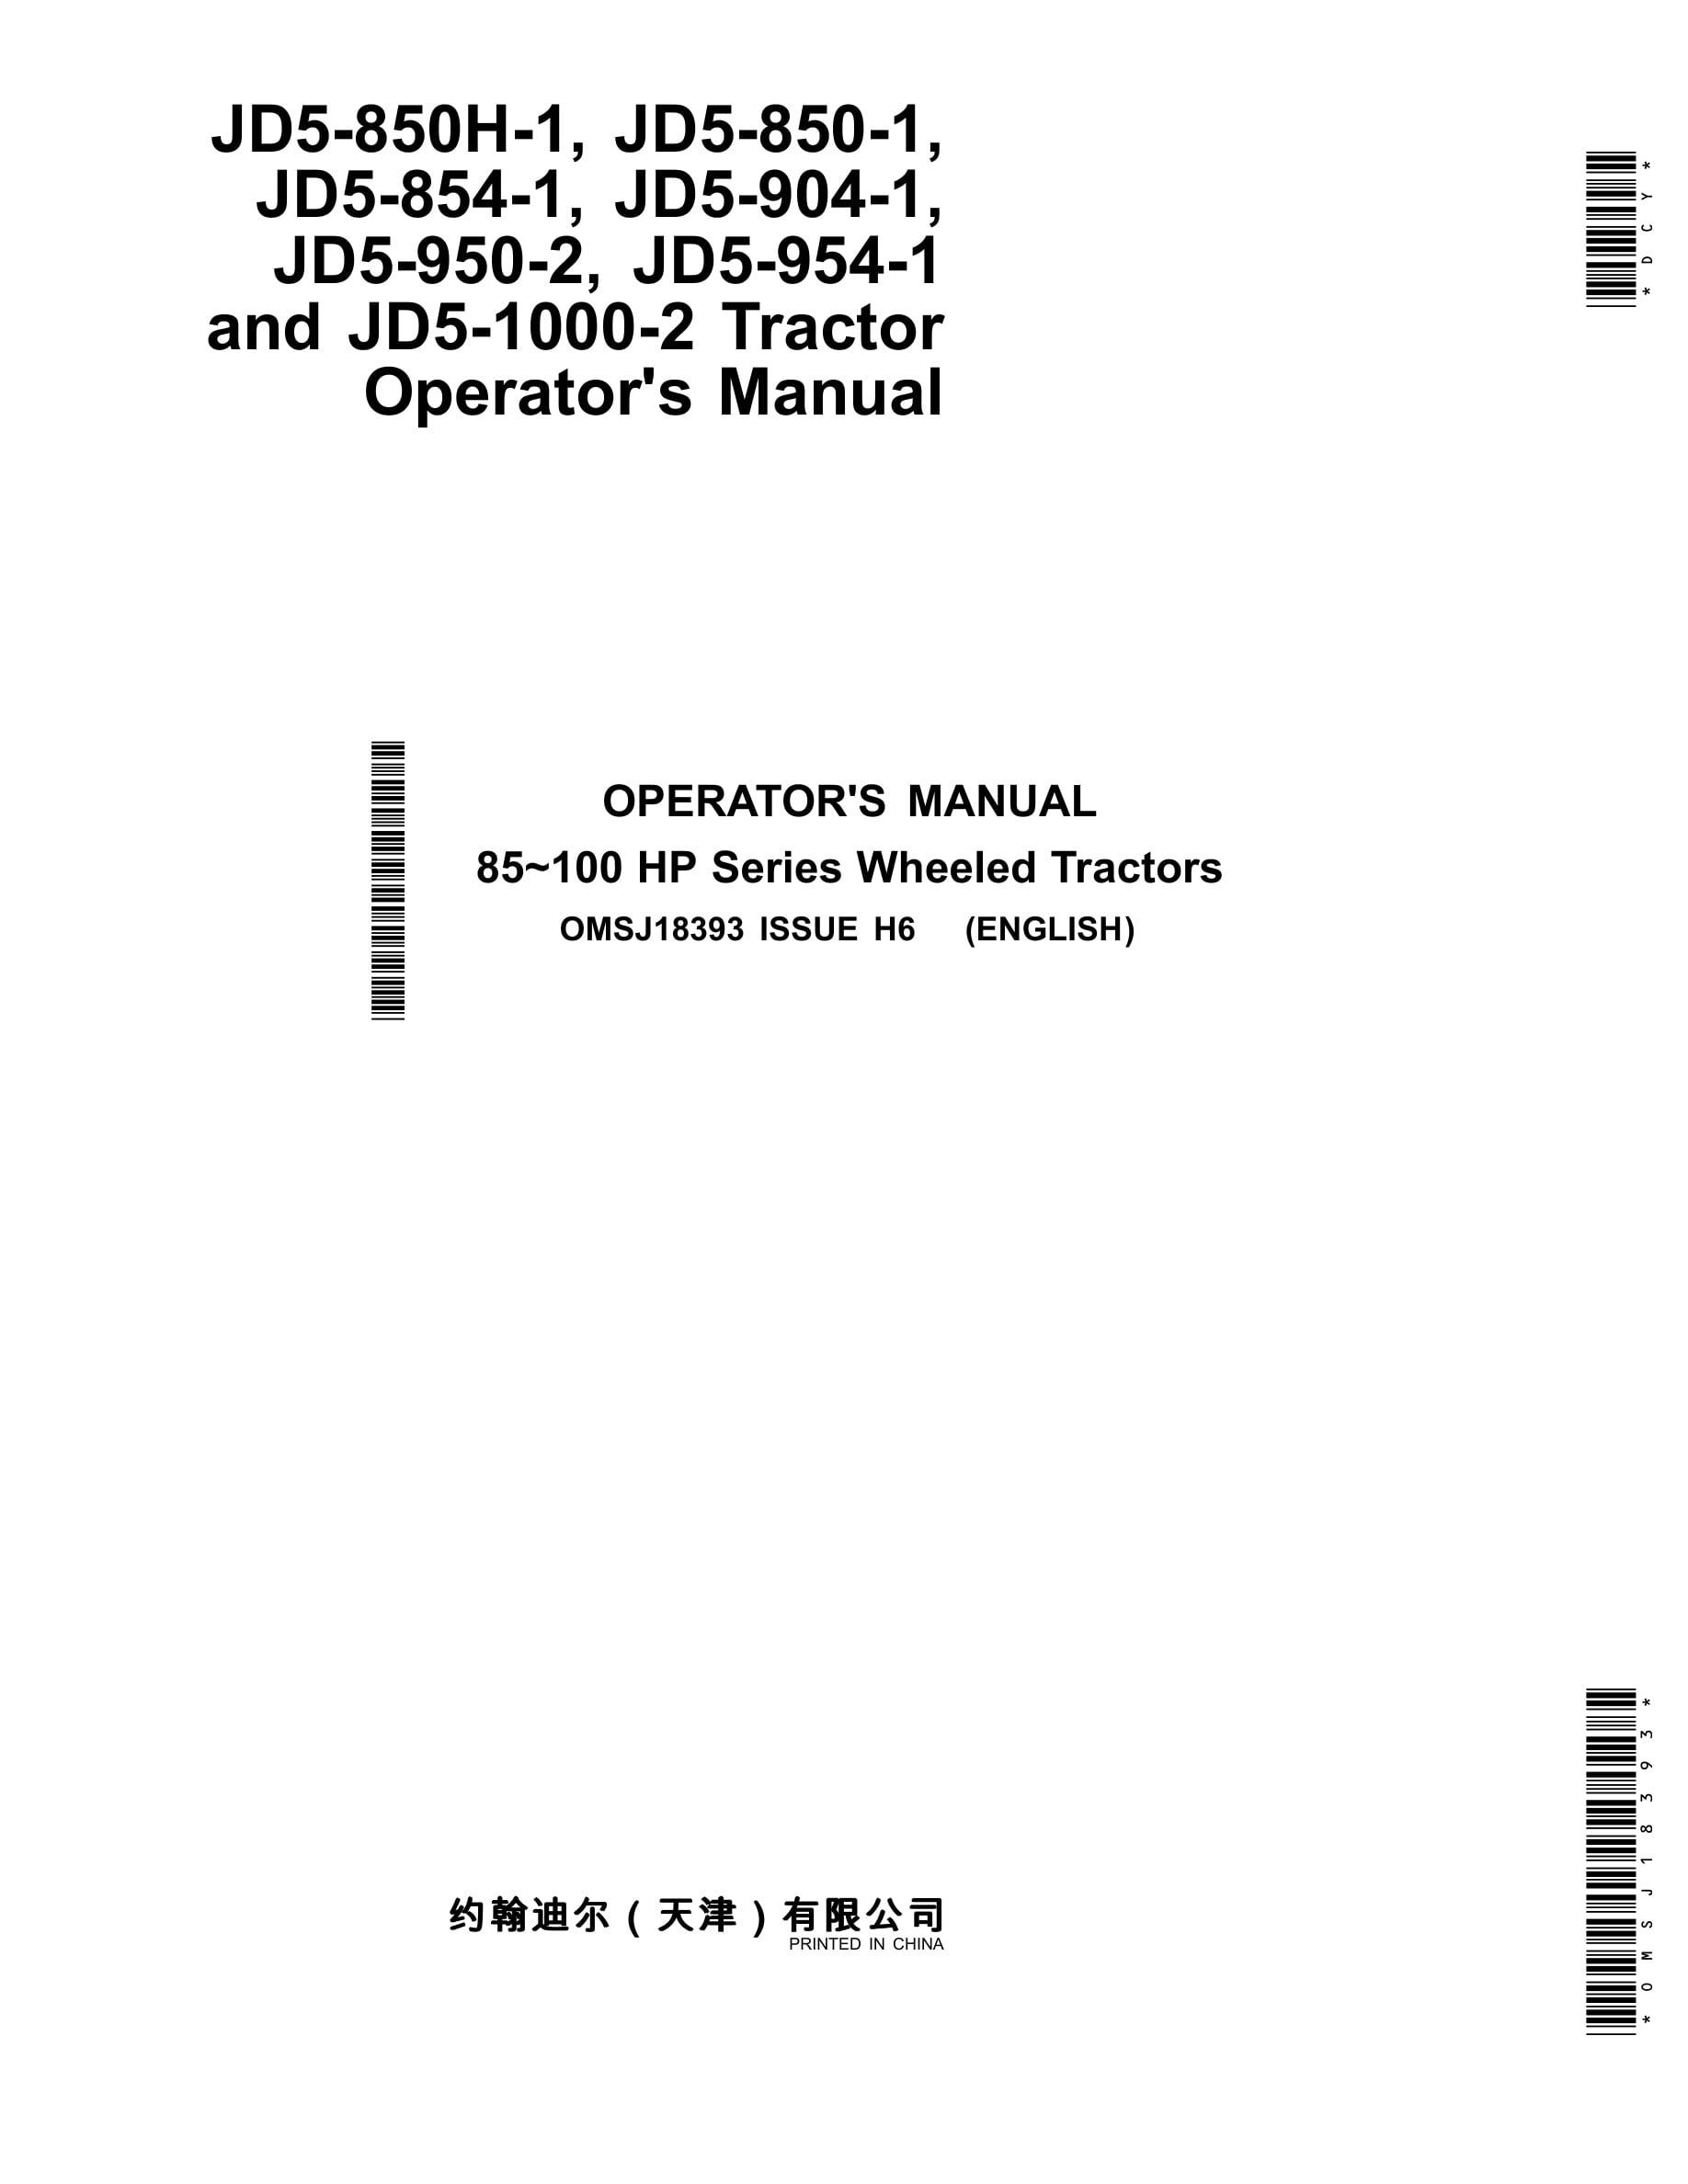 John Deere Jd5-850h-1, Jd5-850-1, Jd5-854 Operator Manual OMSJ18393-1